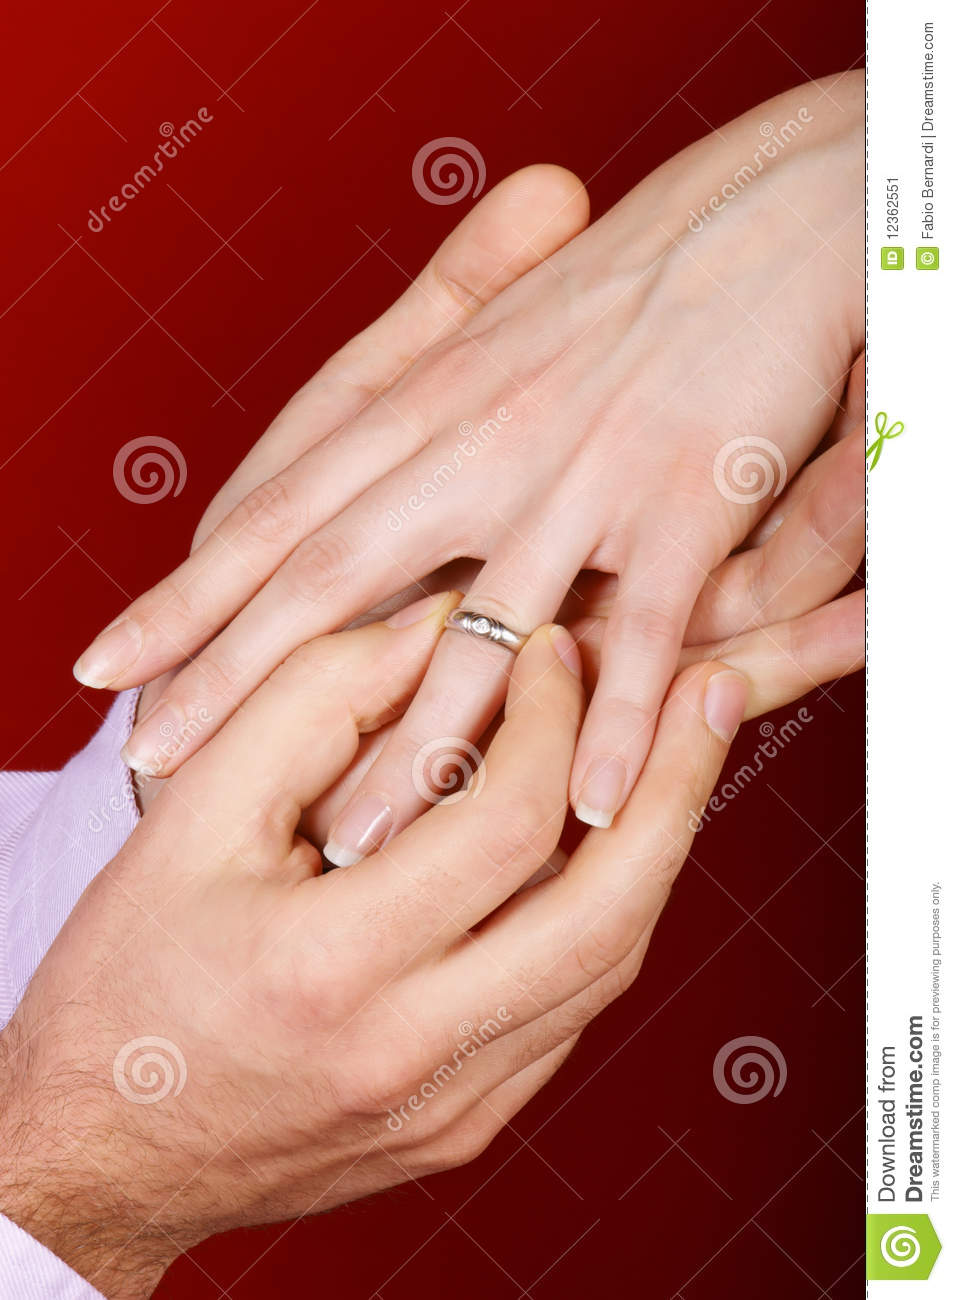 Wedding Proposal Stock Image   Image  12362551